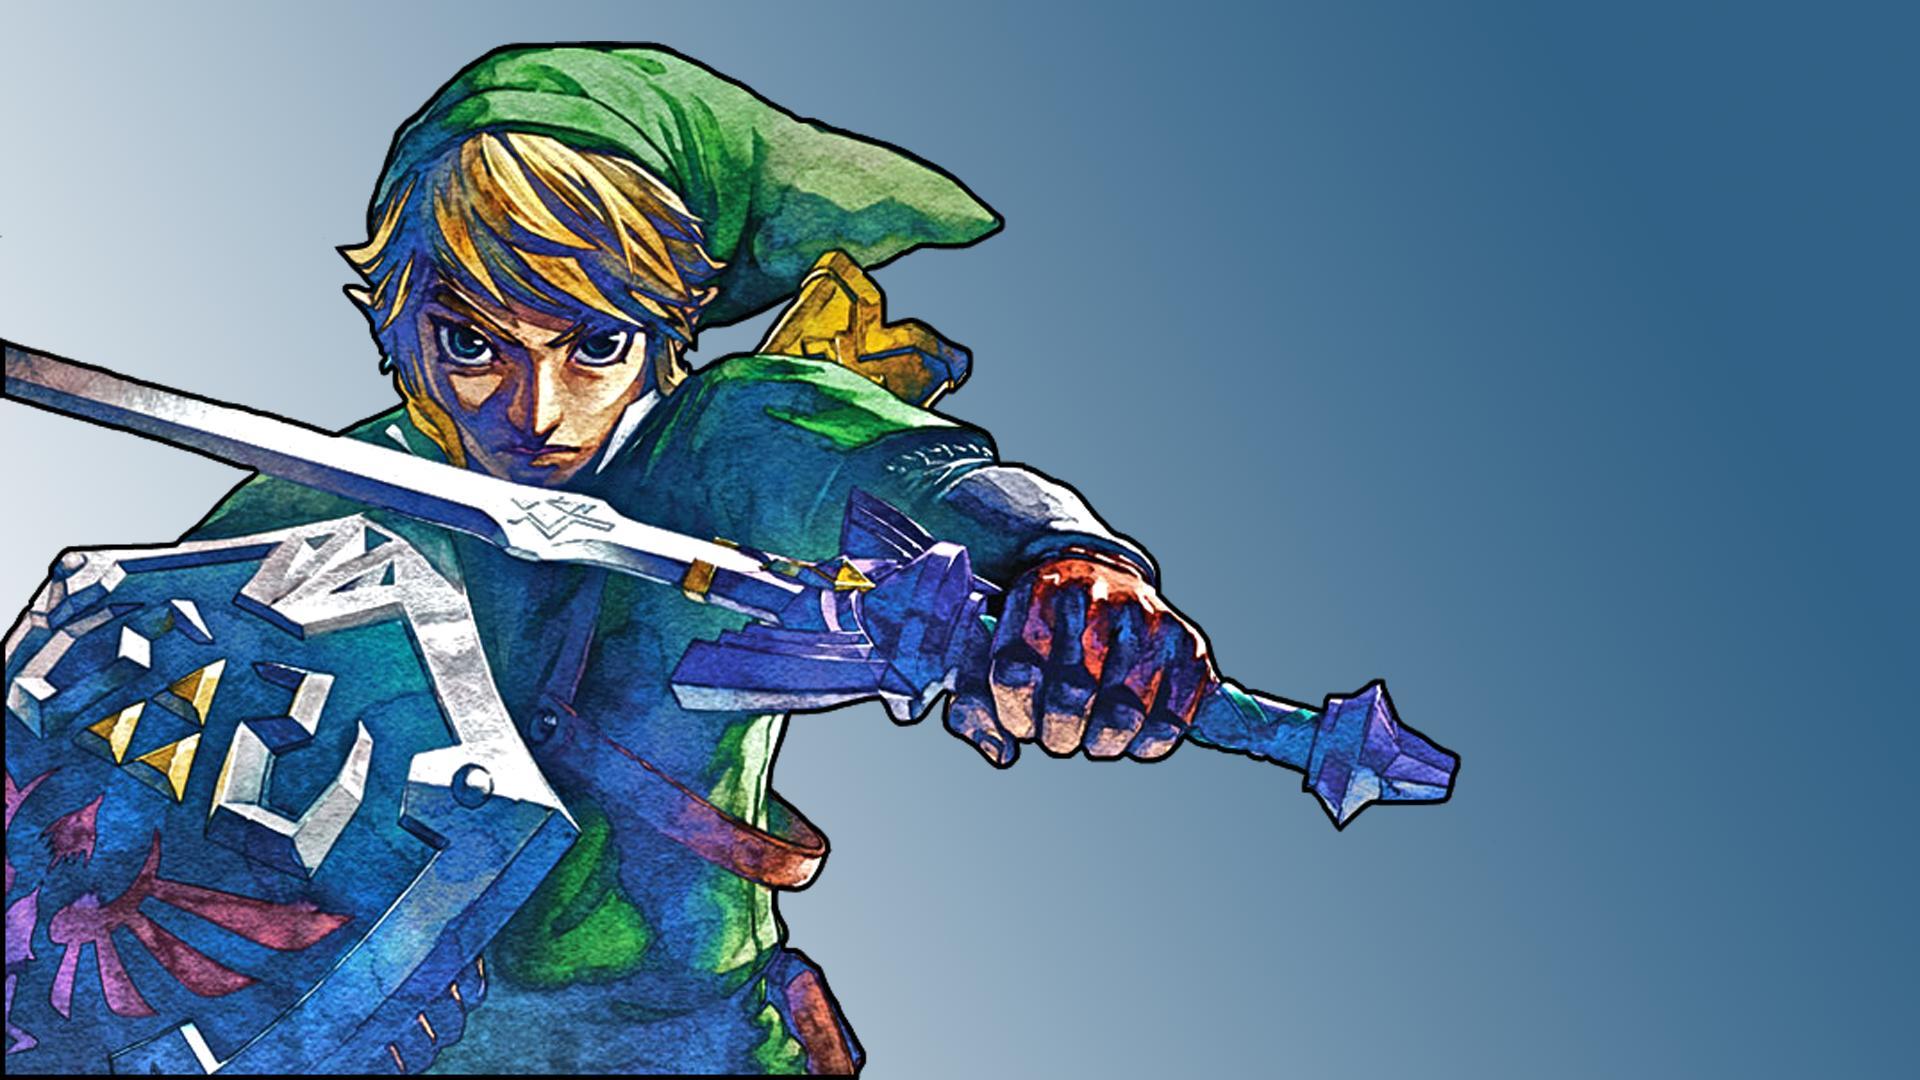 Wallpaper Wallpaper from The Legend of Zelda: Skyward Sword